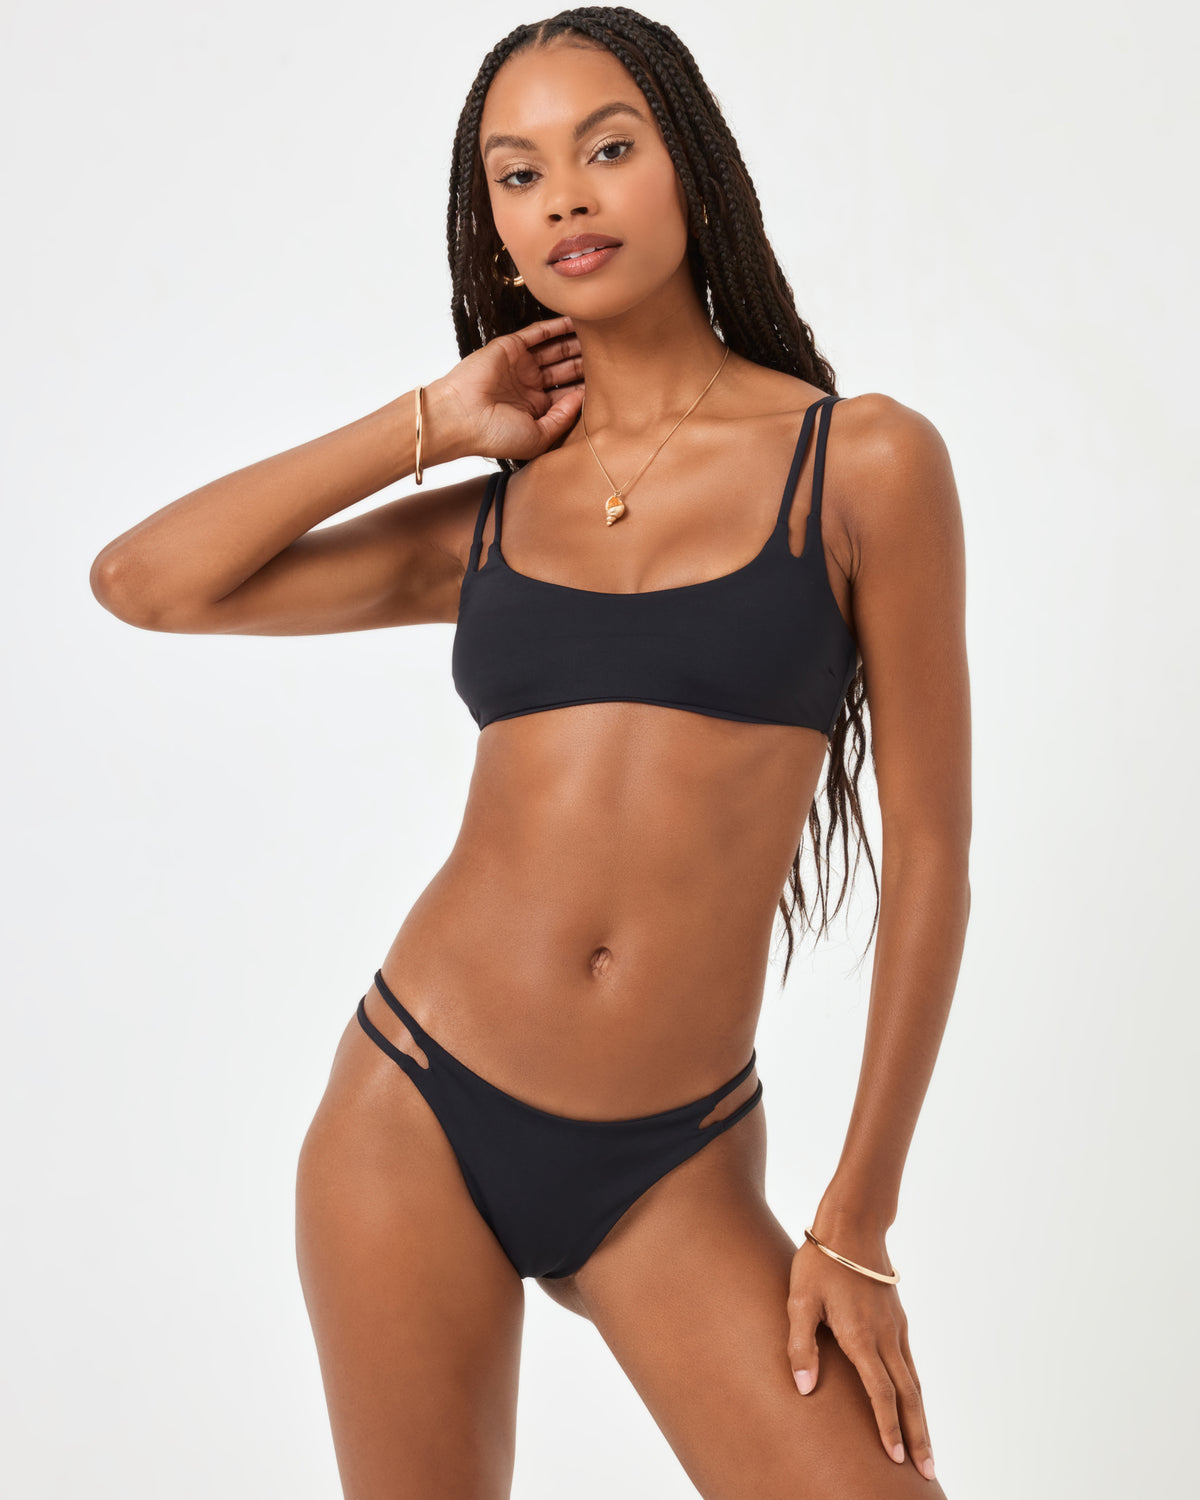 Zinnia Bikini Top - Black Black | Model: Taelor (size: S)